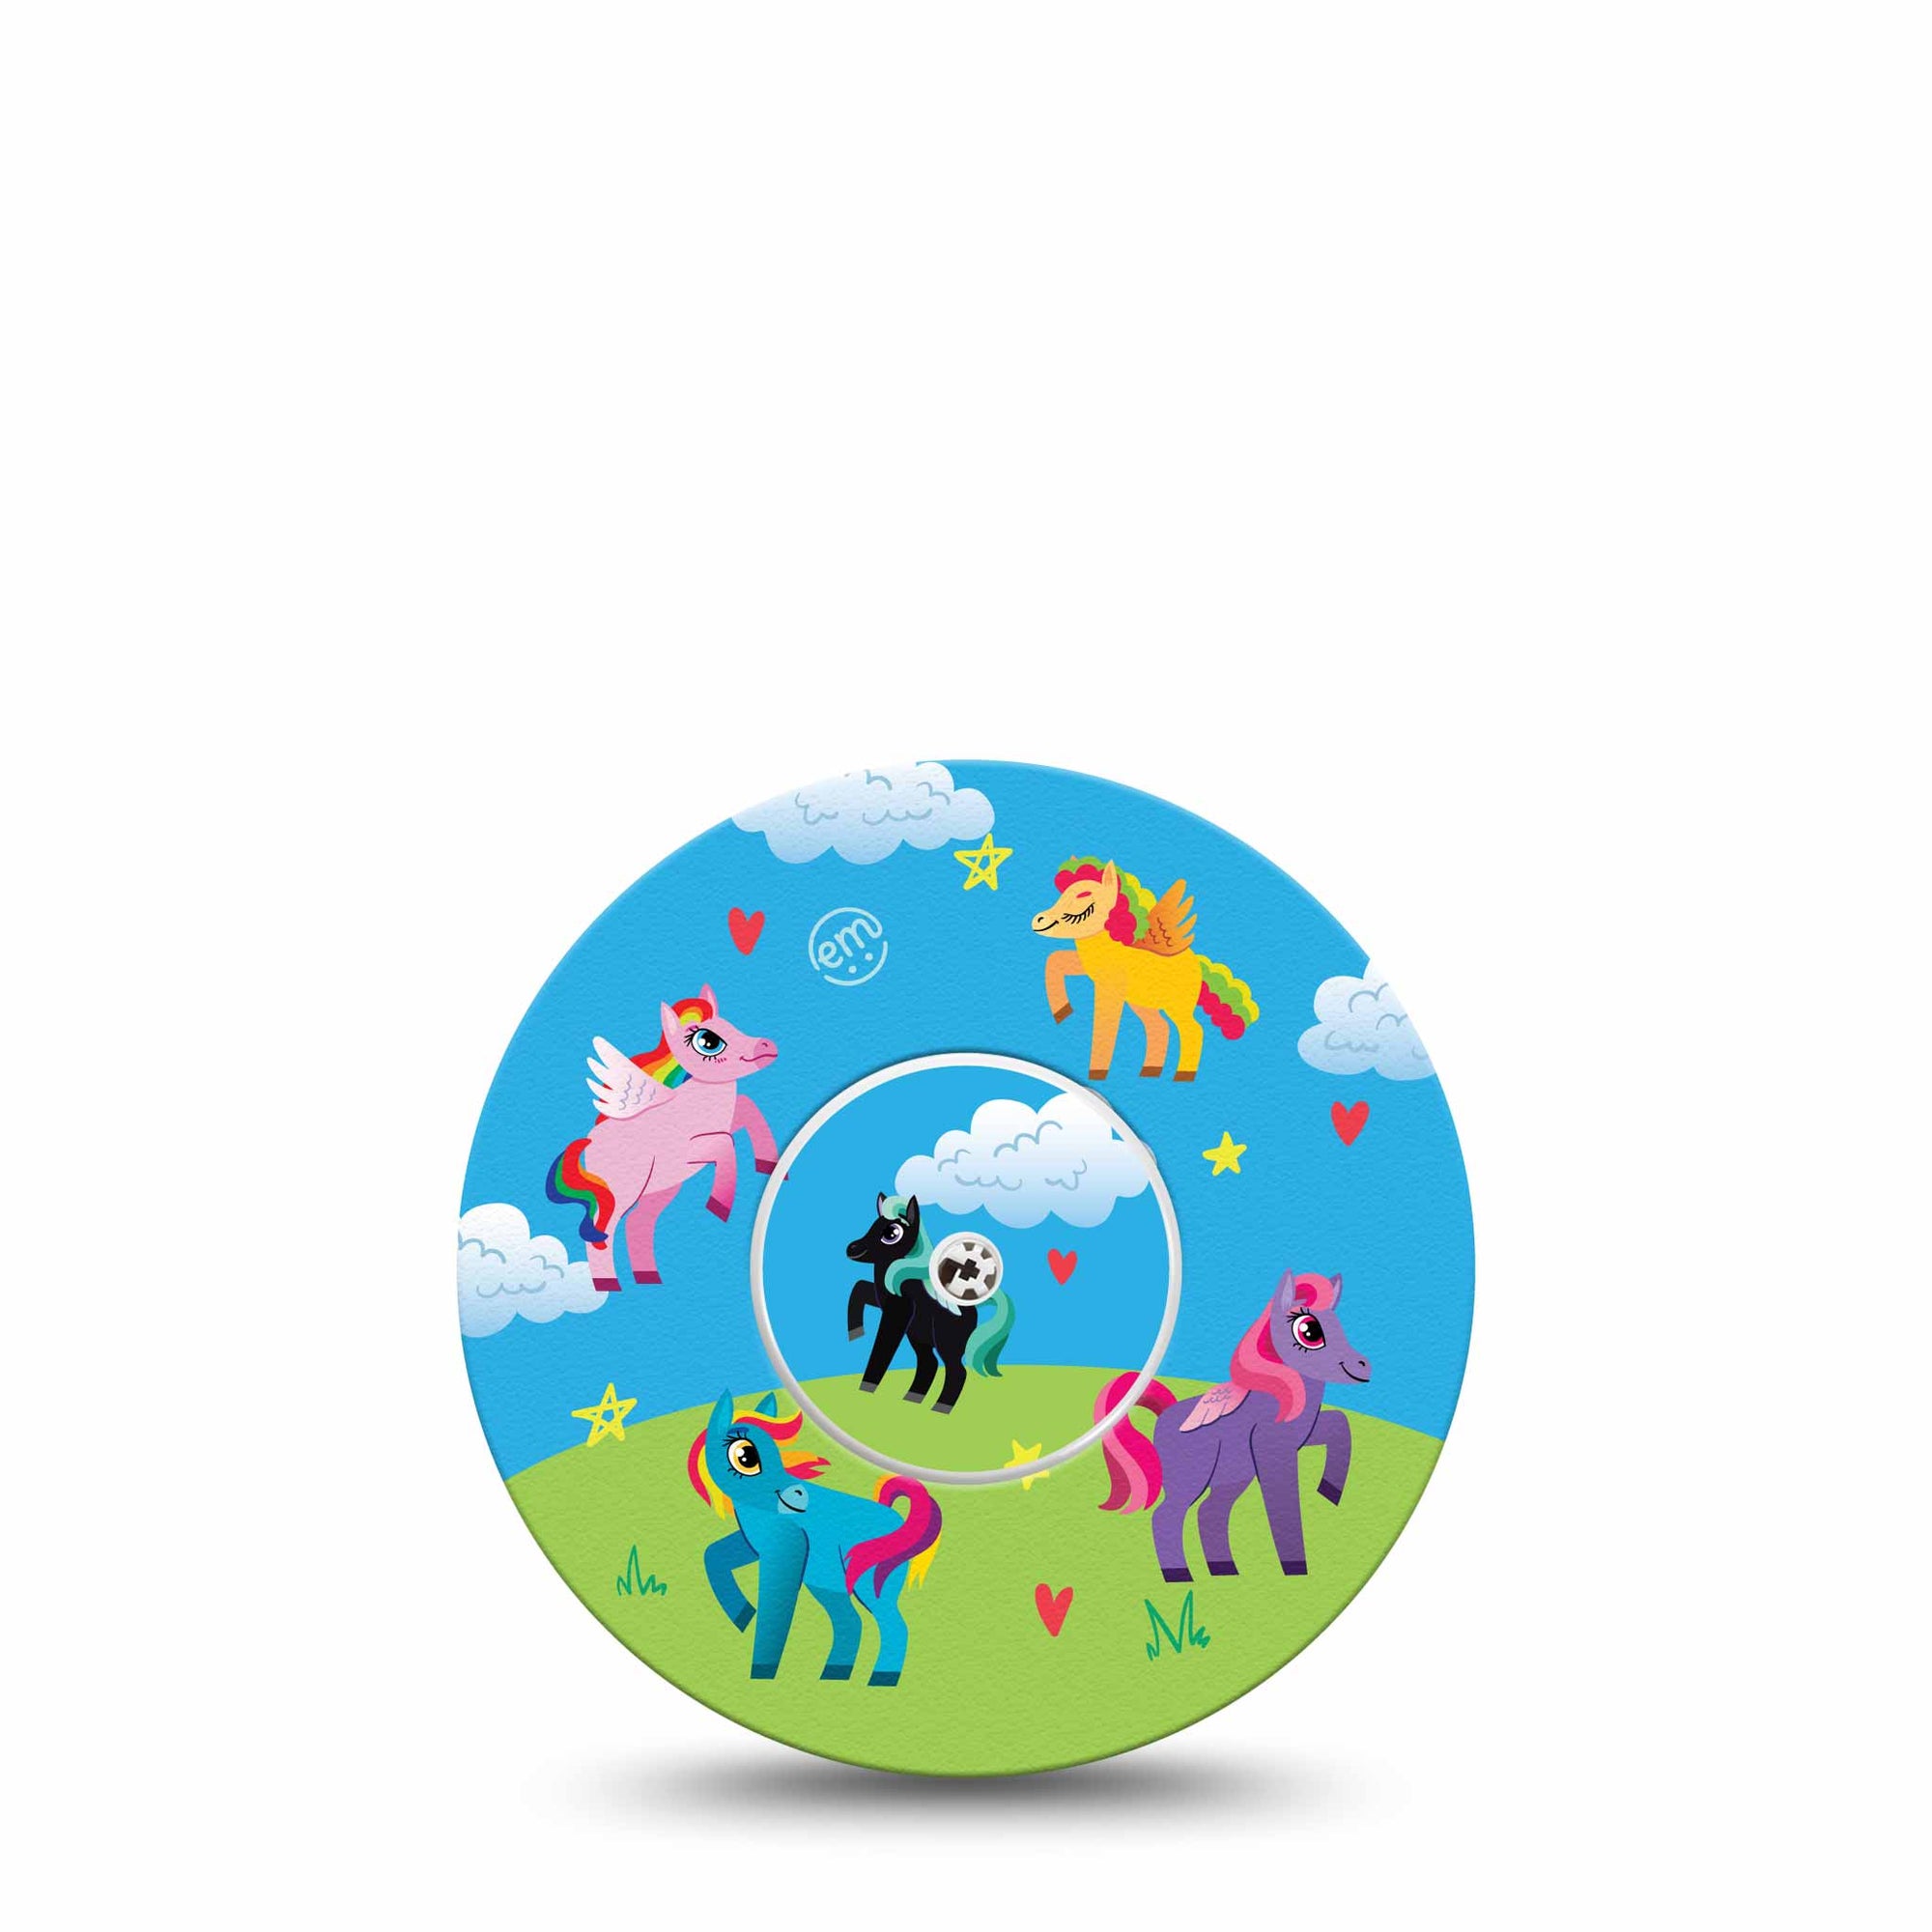 ExpressionMed Lil' Ponies Libre Transmitter Sticker, Abbott Lingo